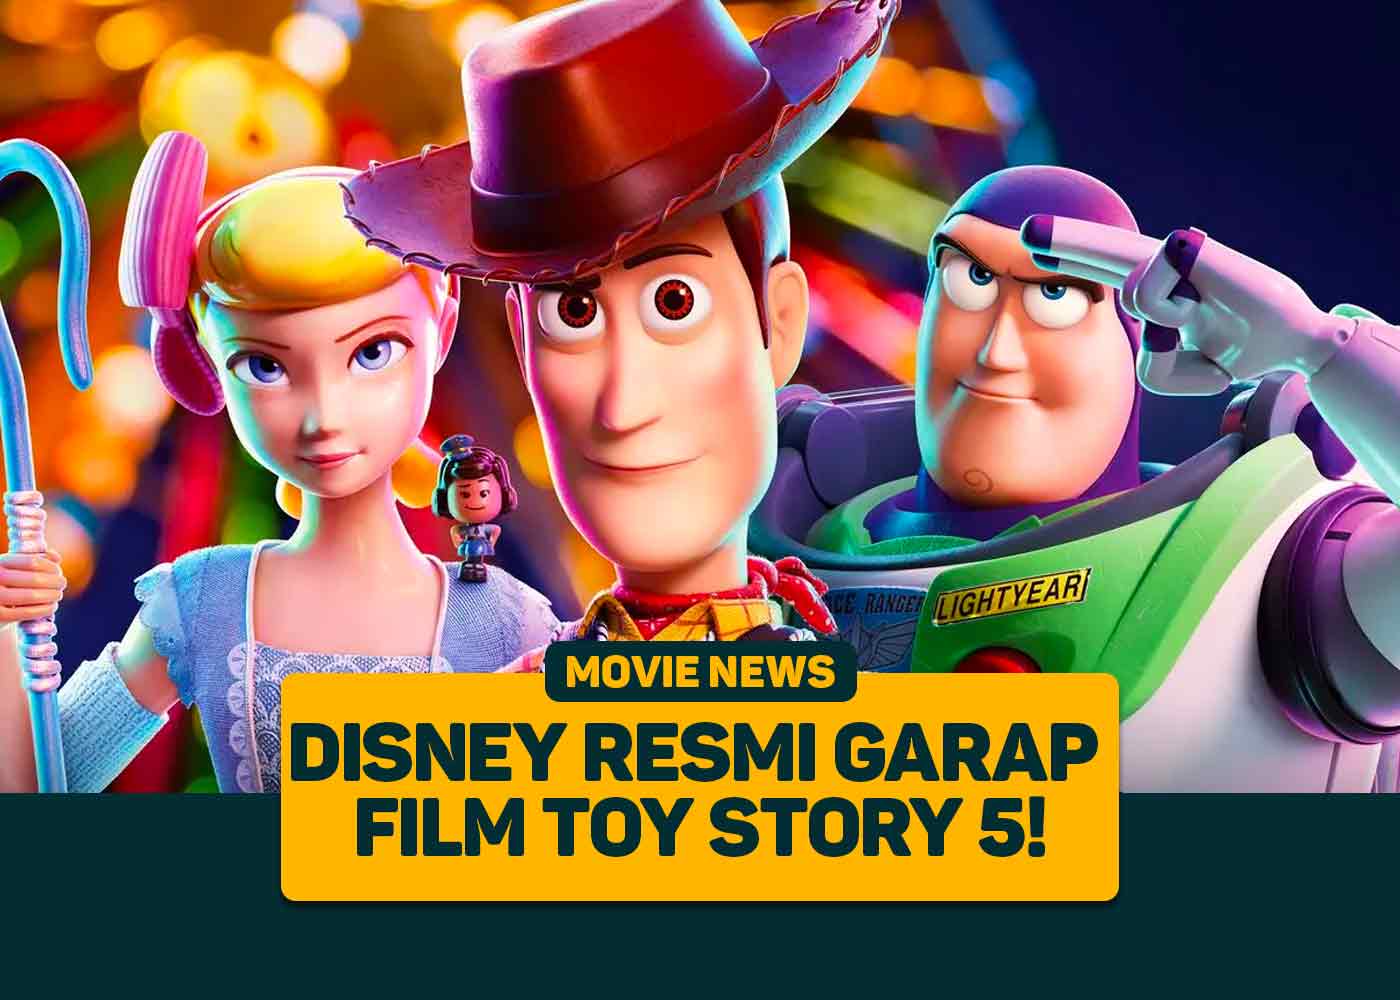 Disney Resmi Garap Film Toy Story 5!